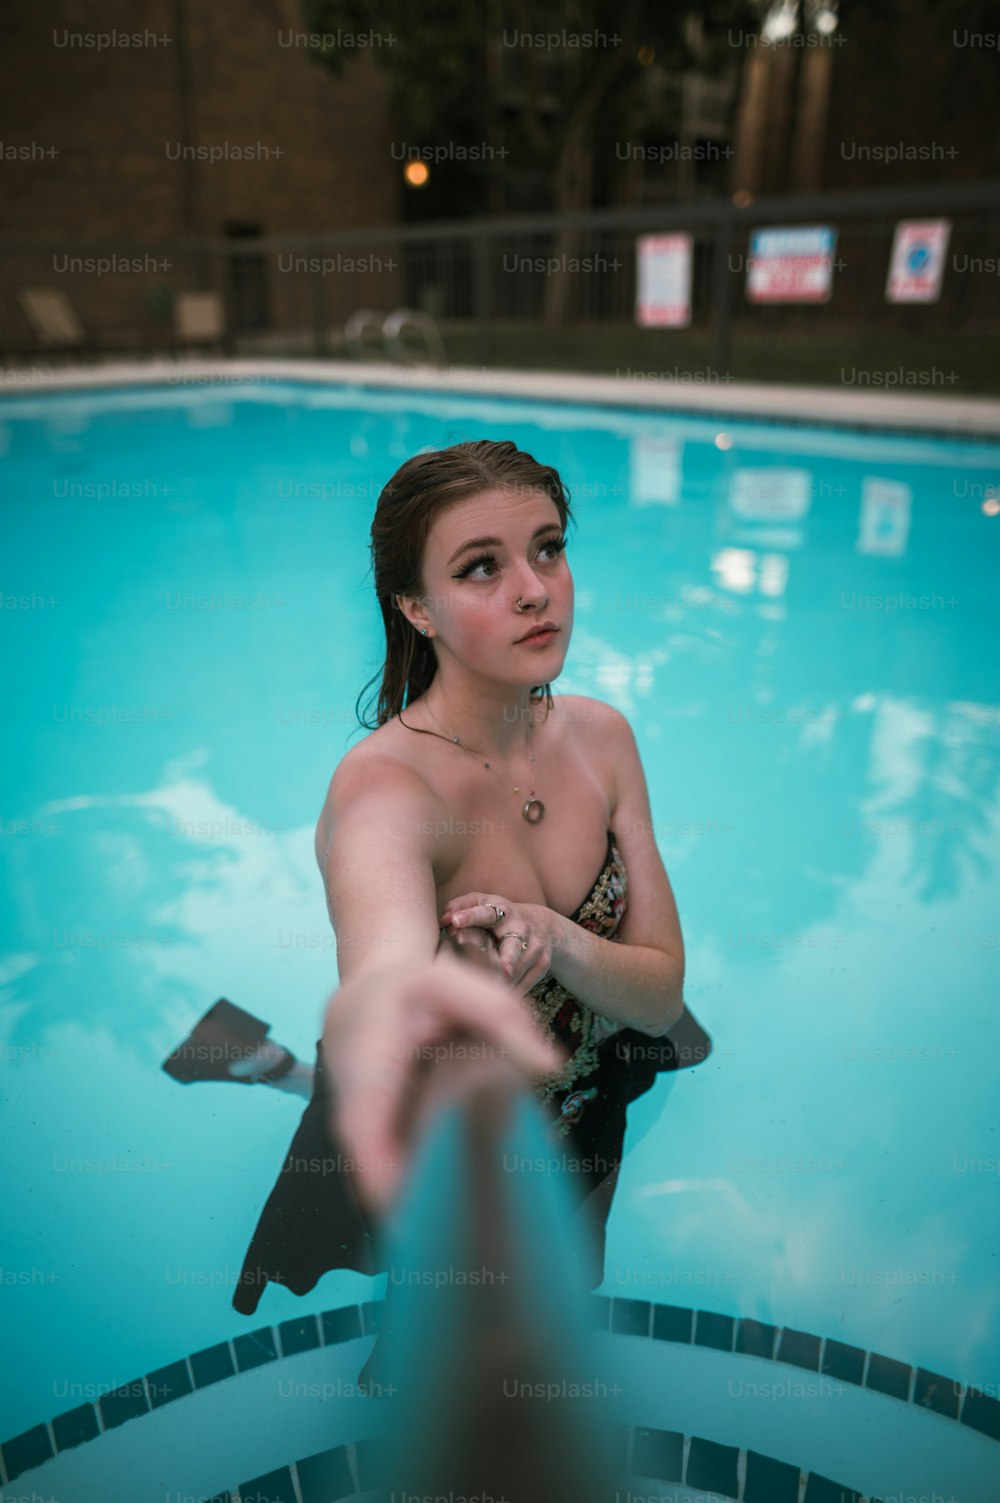 Eine Frau im Bikini steht in einem Swimmingpool